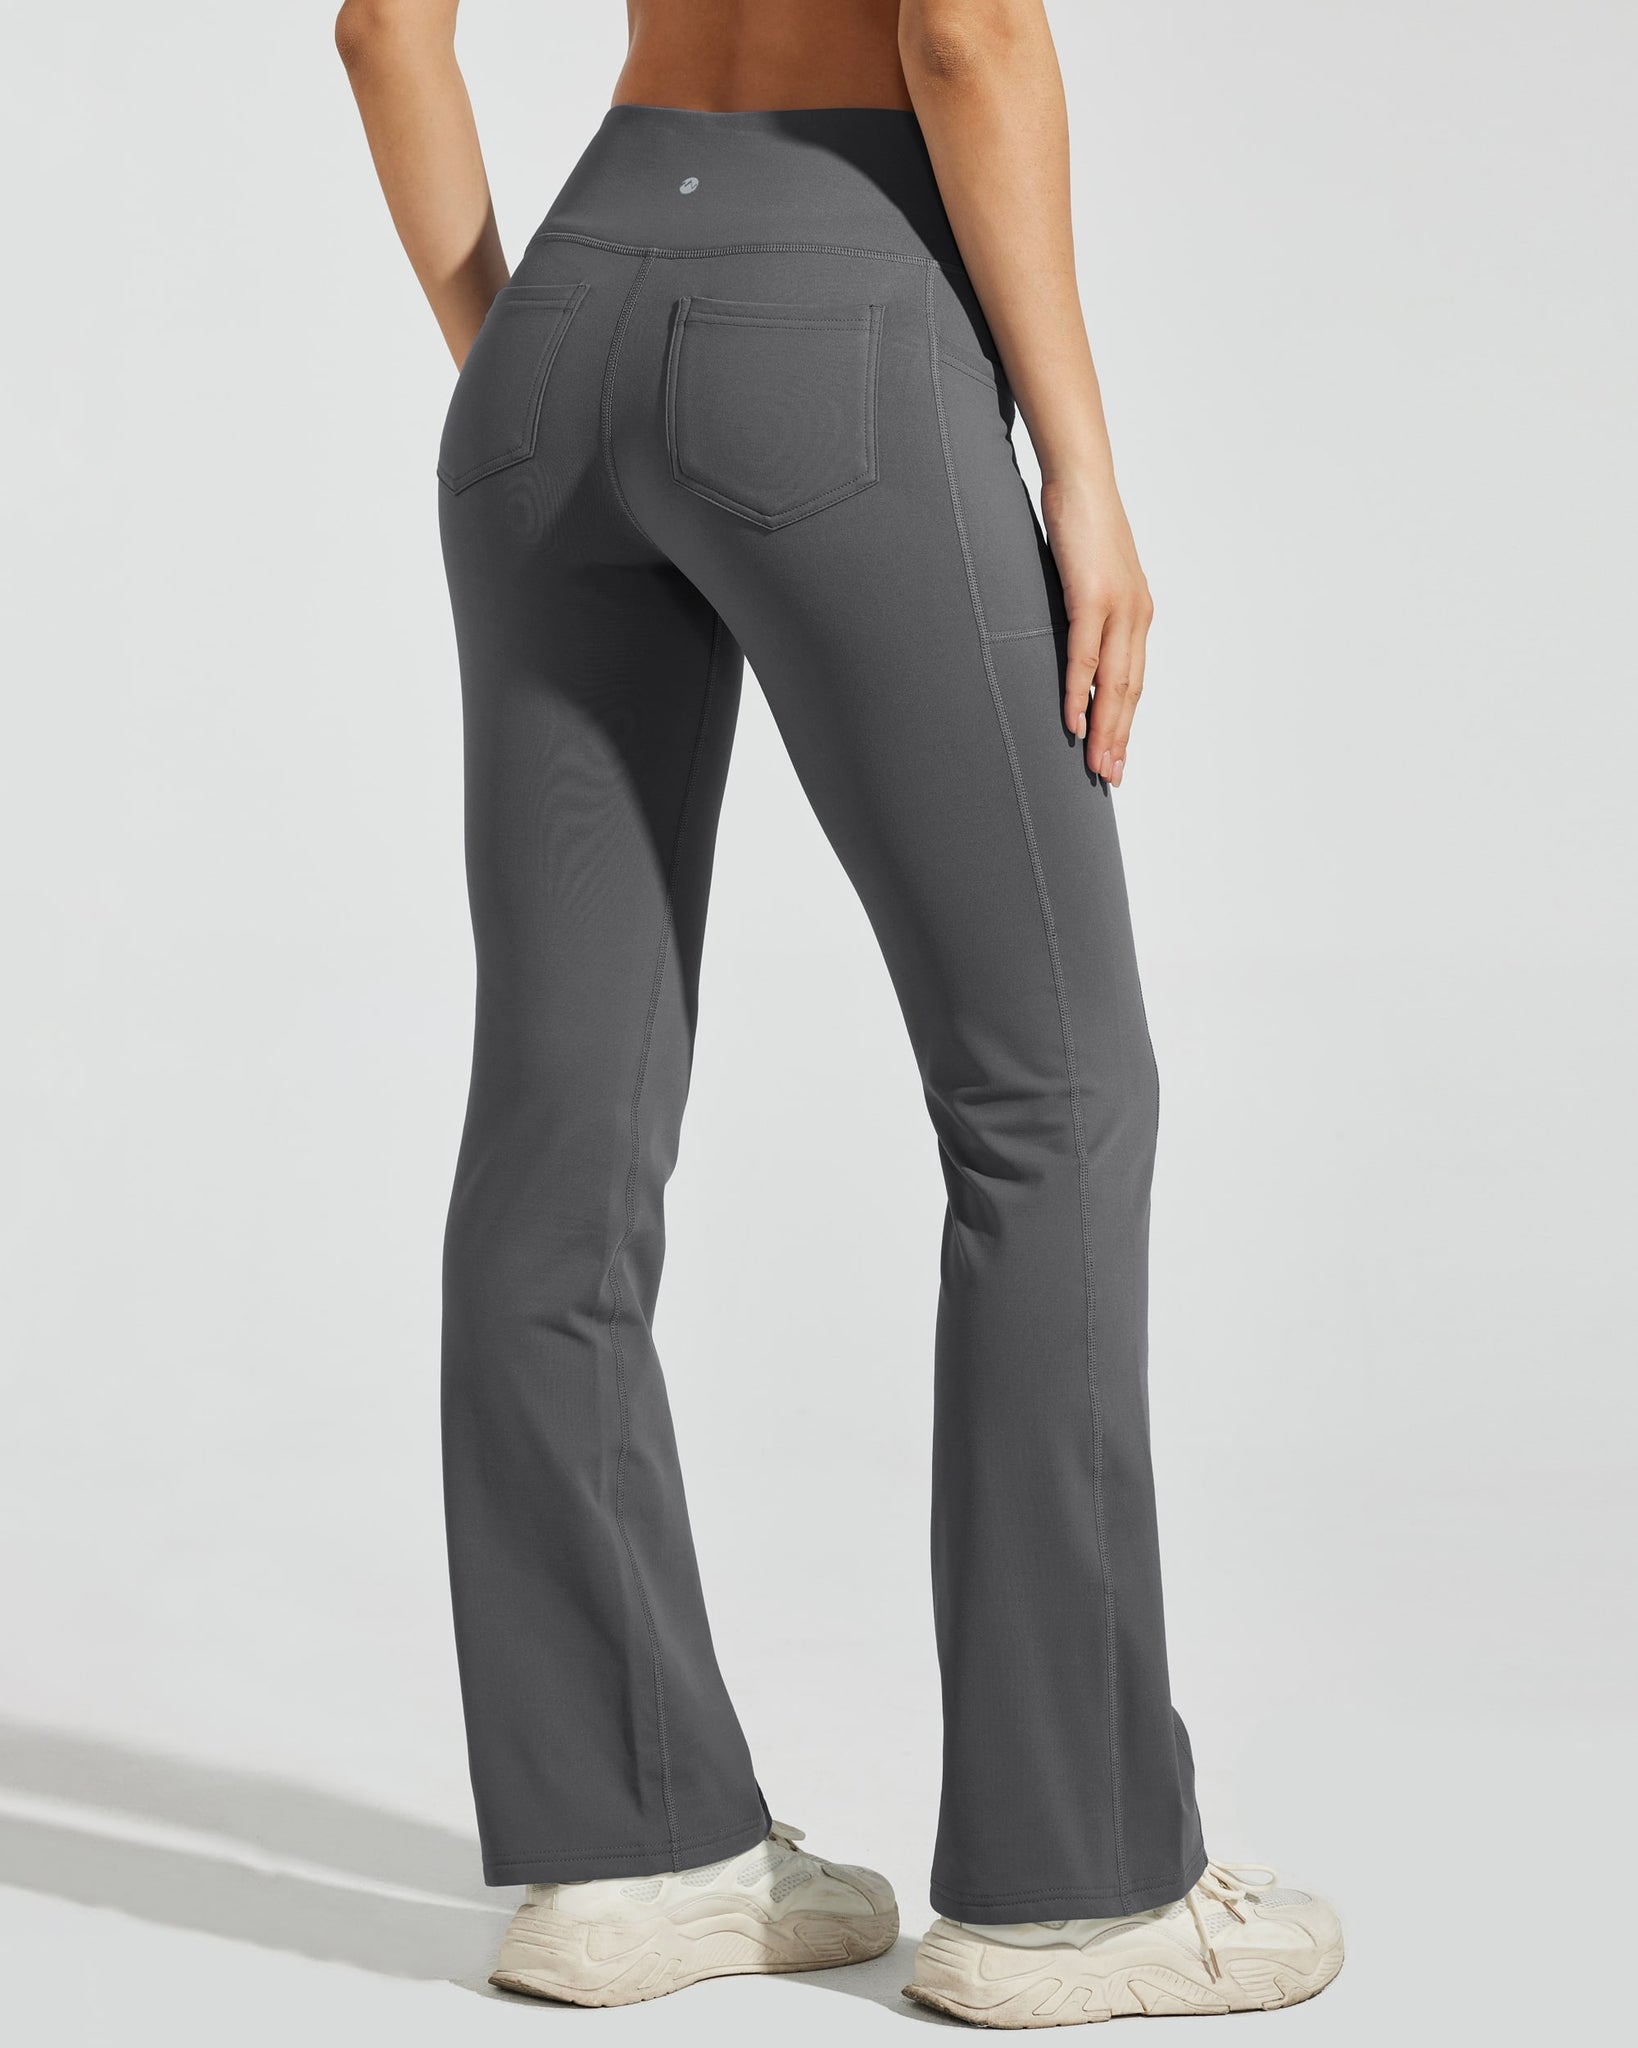 Women's Fleece Lined Bootcut Yoga Pants_Gray_model5